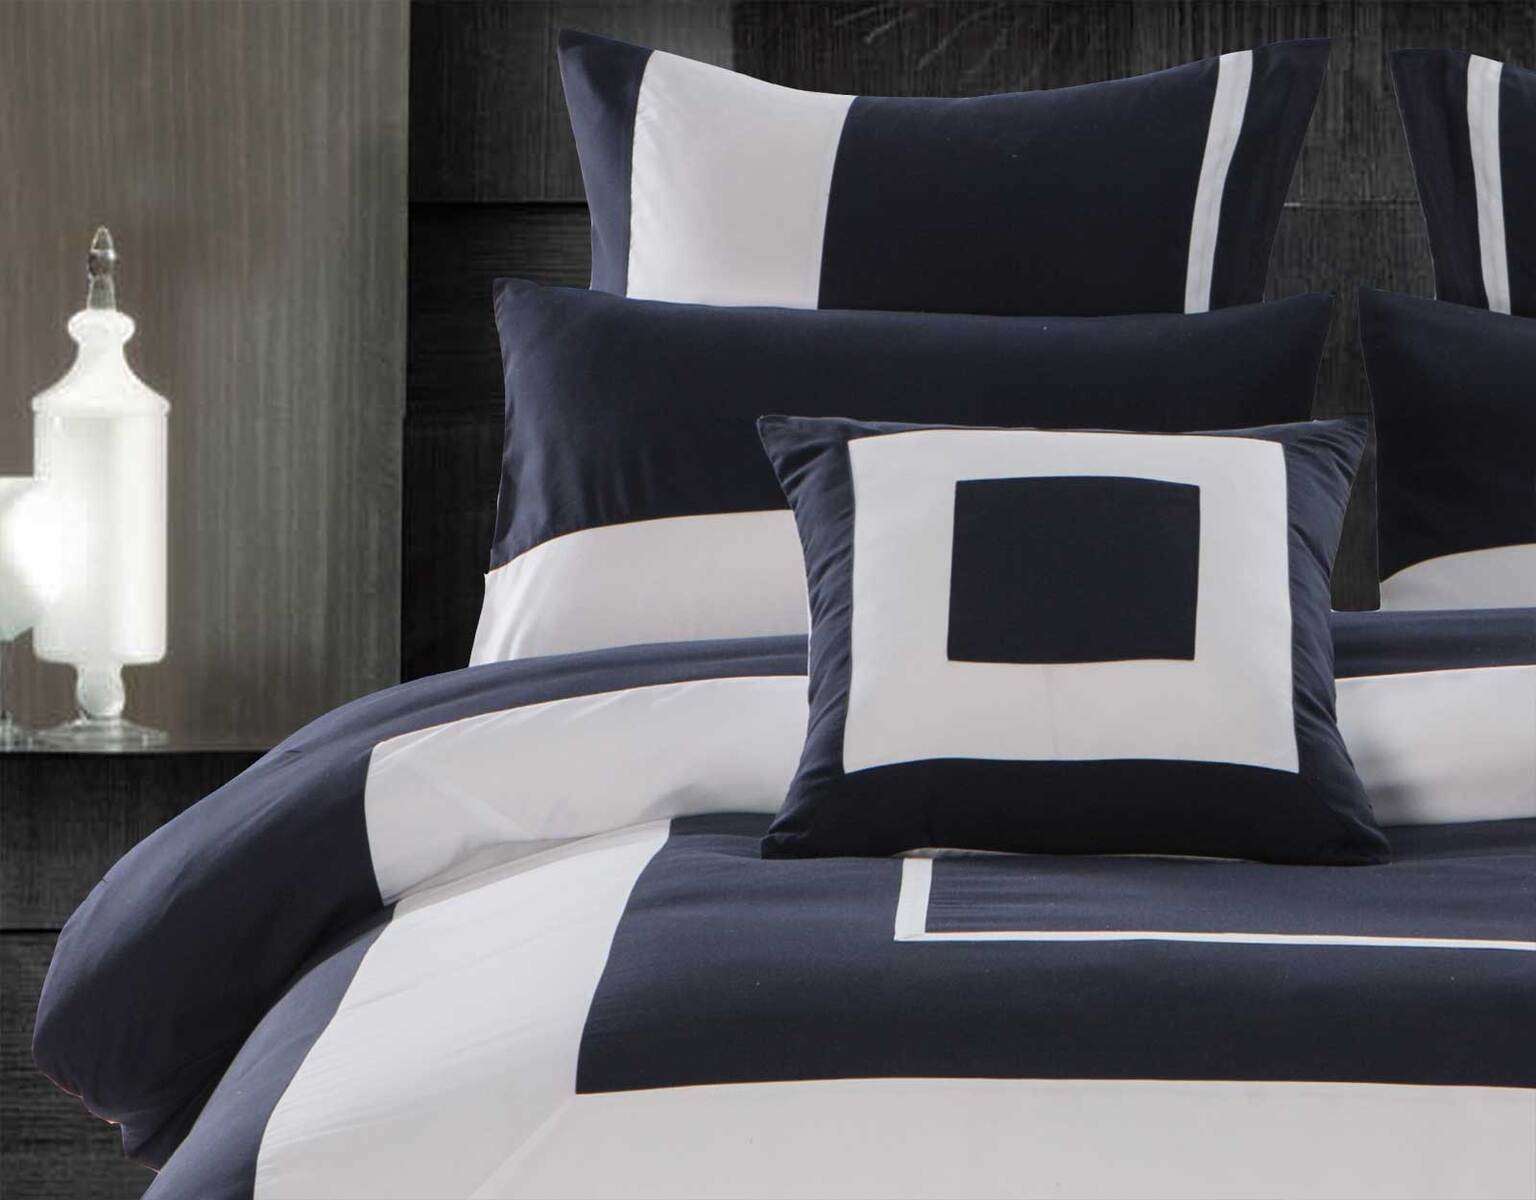 Bedding 3pcs Navy Blue King Size Quilt Cover Set